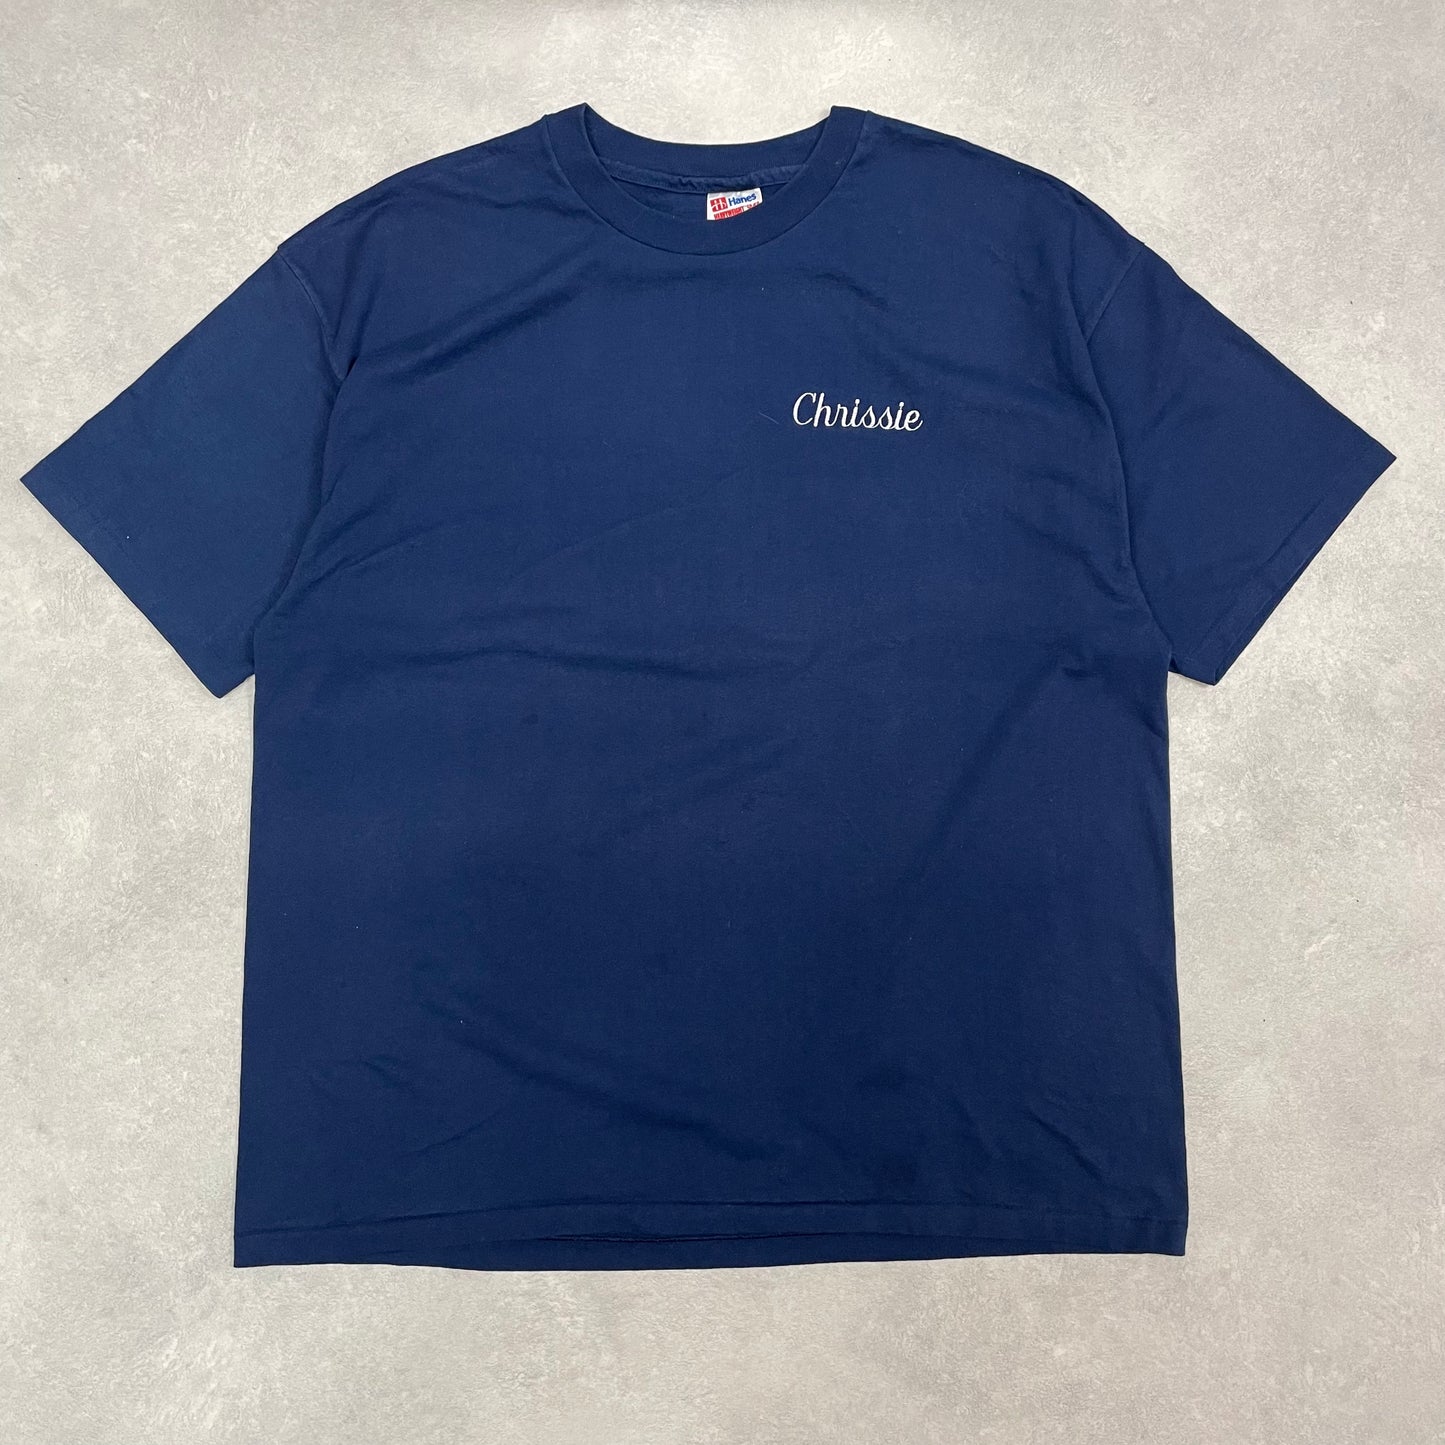 Vintage Single Stitch T-Shirt Hanes “Mt Laurel Emergency Medical Services” Made in USA